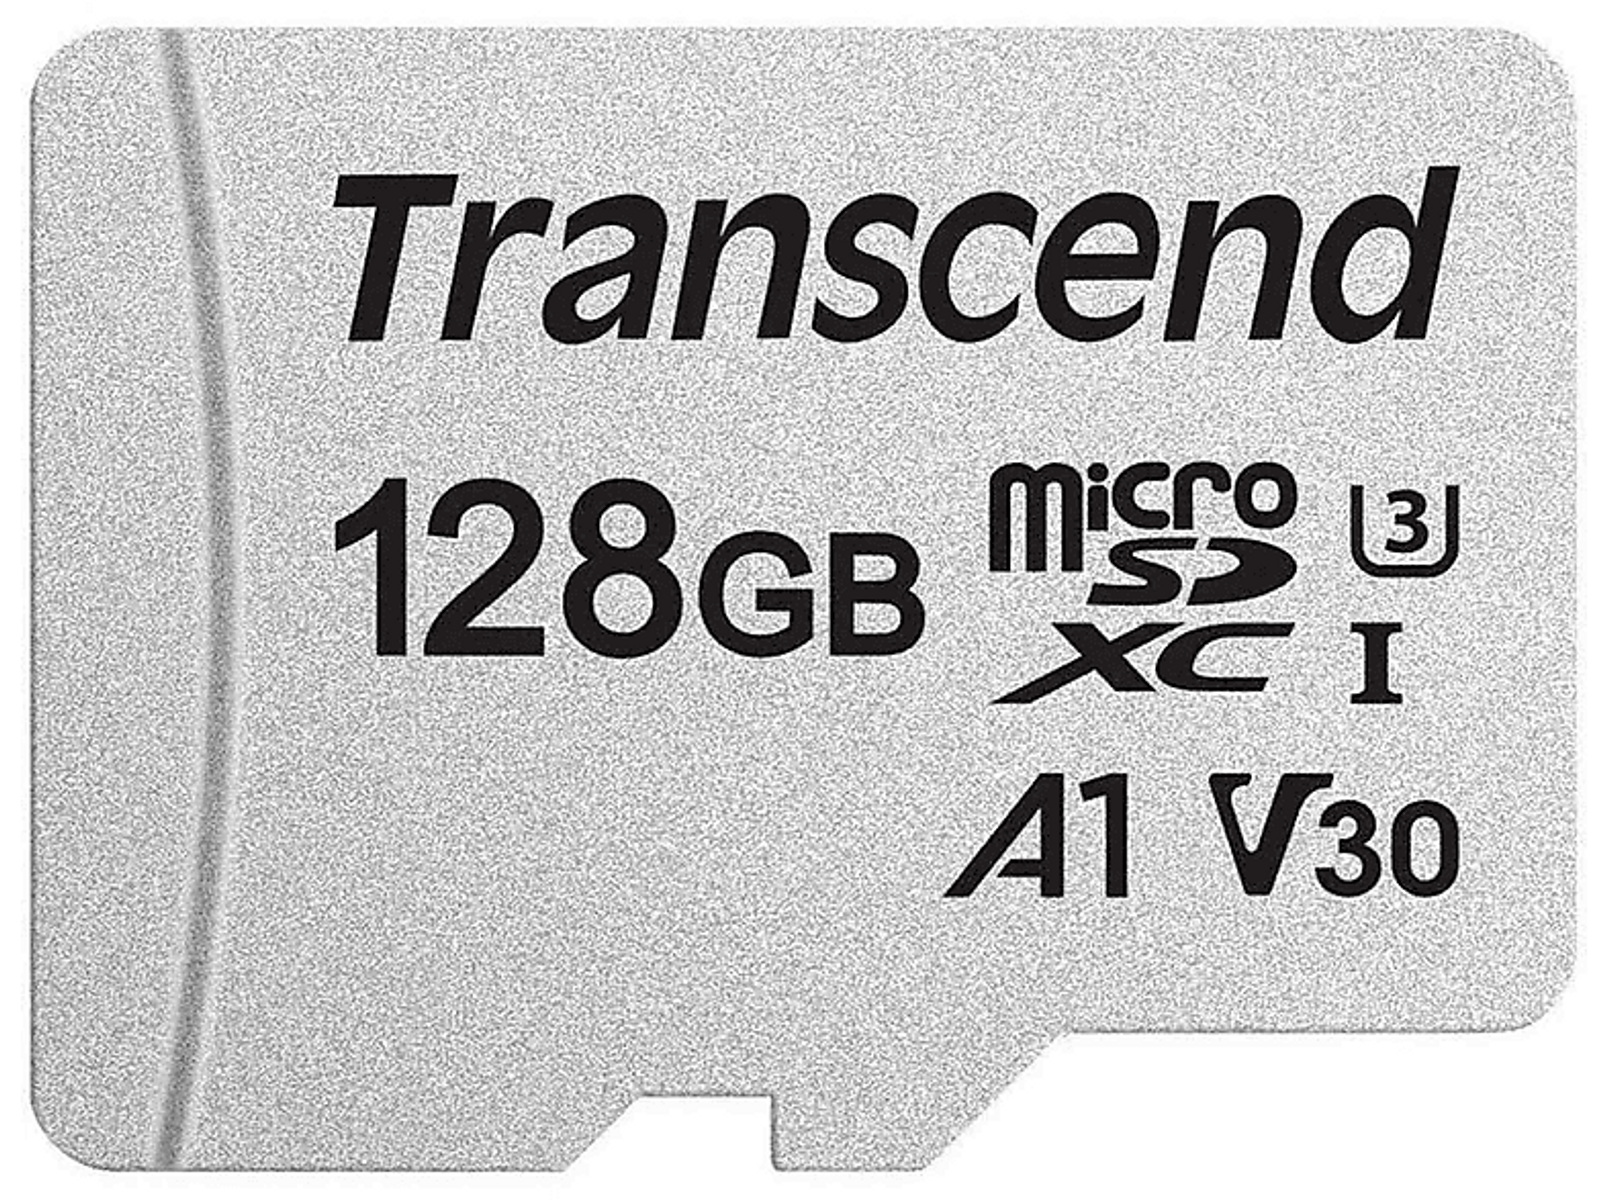 TRANSCEND m0000CGRTW, SDHC, Micro-SDXC, MB/s Micro-SD, GB, SD Speicherkarte, SDXC, 40 128